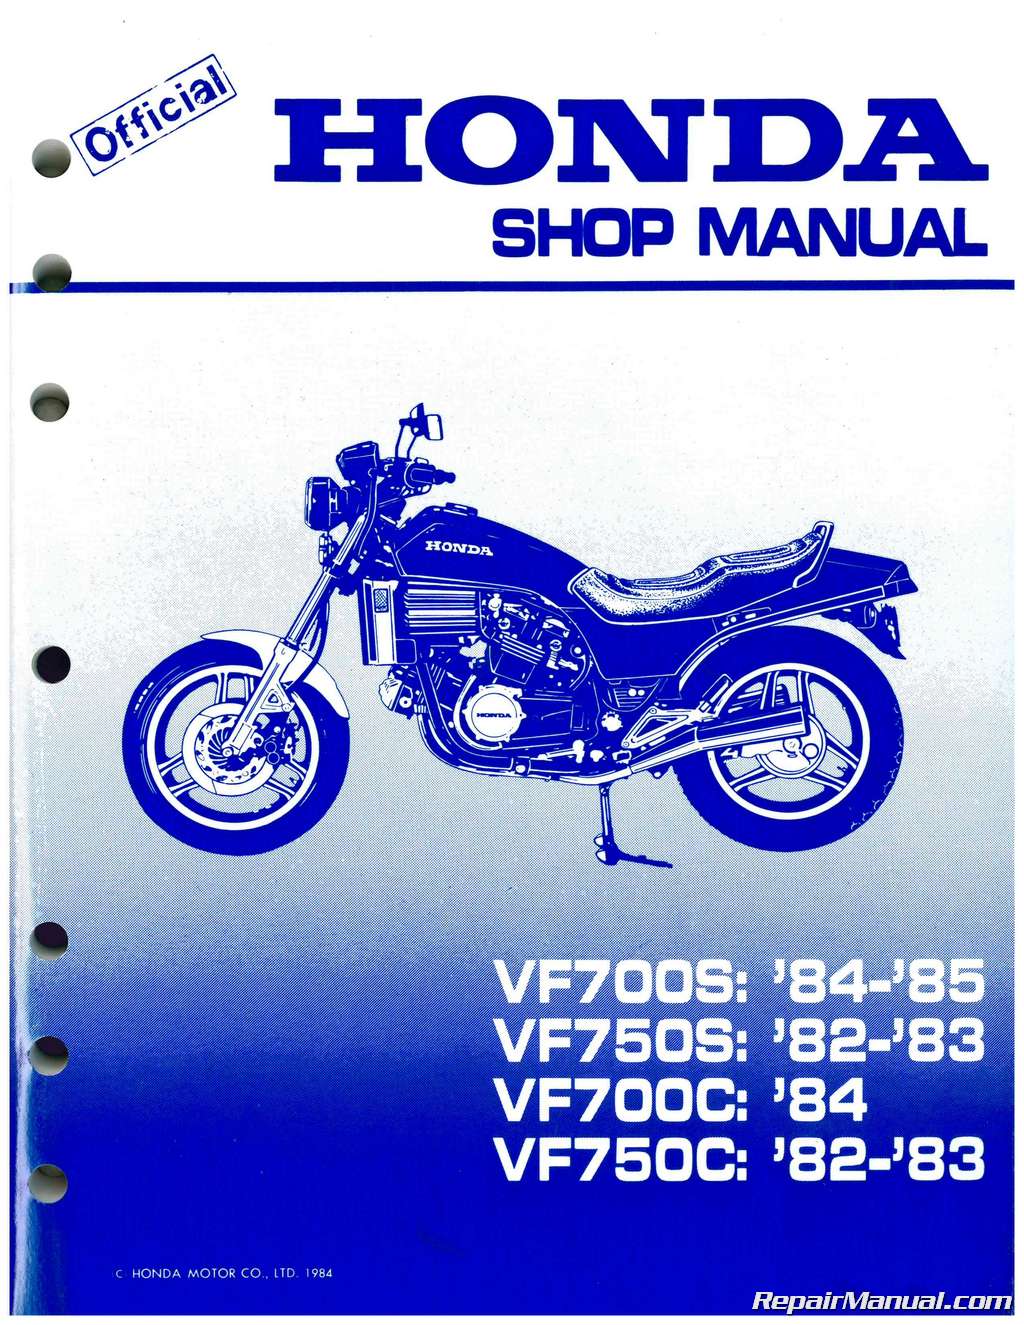 1984 Honda magna vf700c manual #5